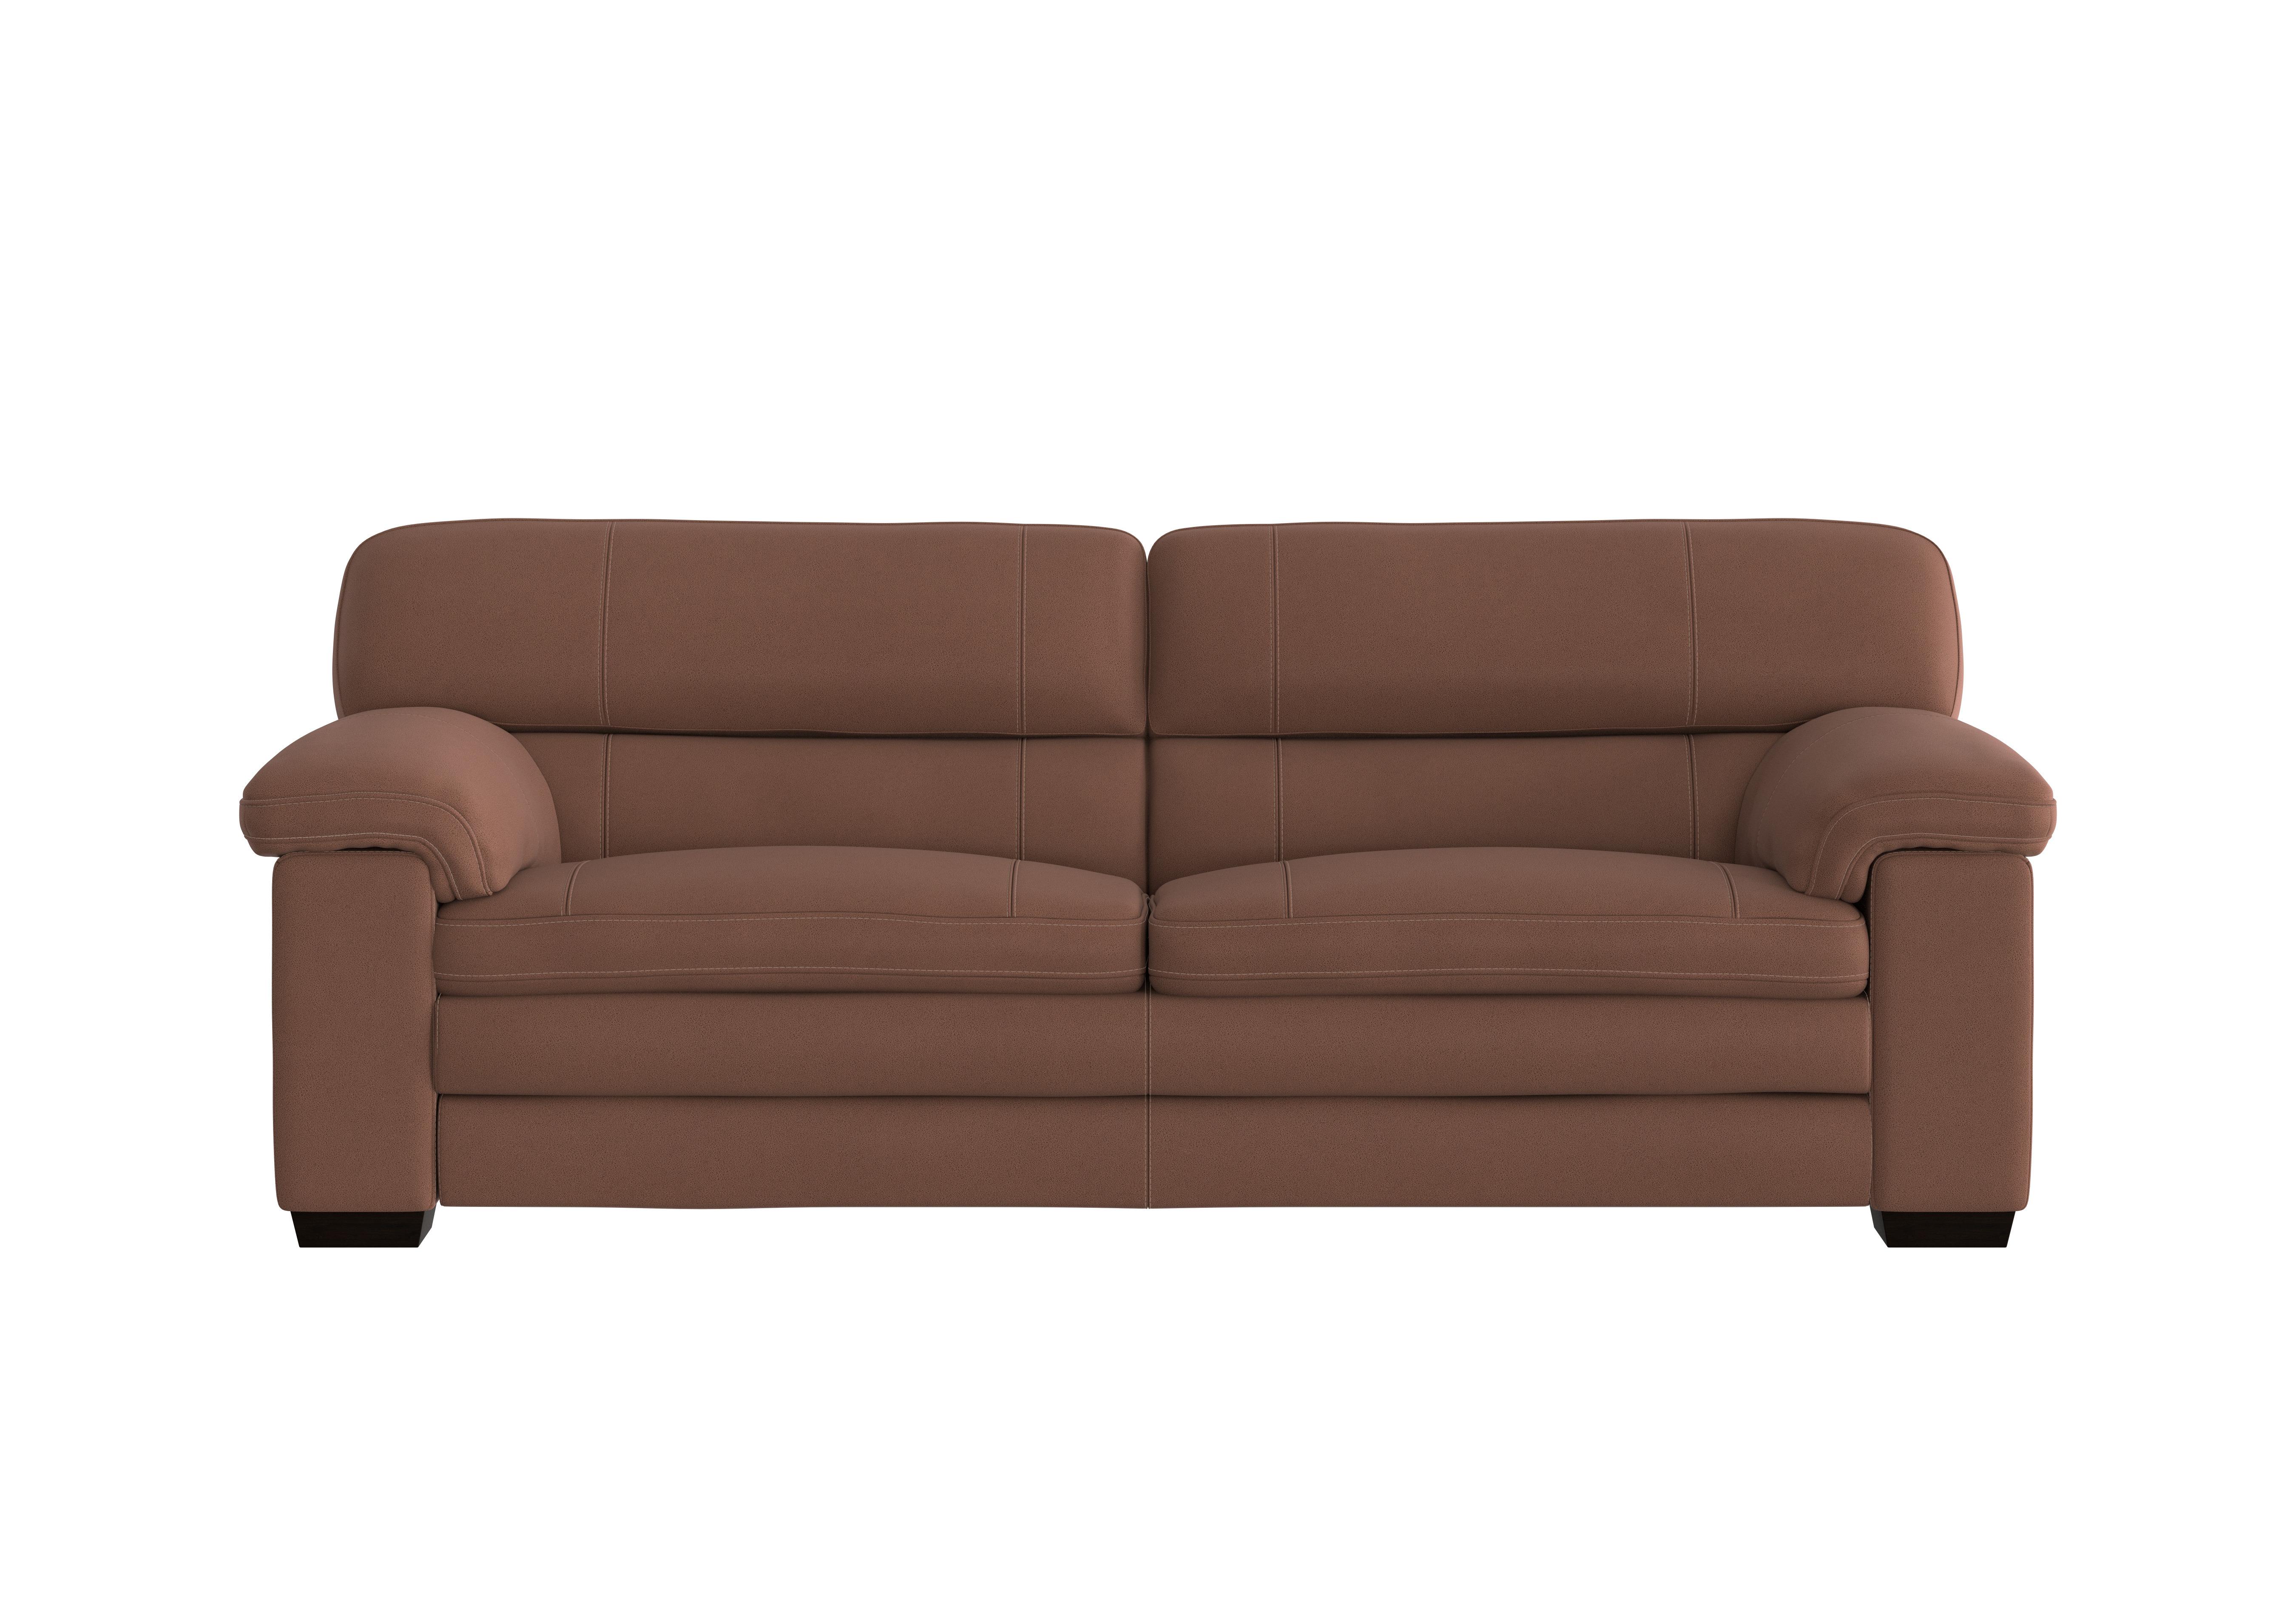 Cozee Fabric 3 Seater Sofa in Bfa-Blj-R05 Hazelnut on Furniture Village